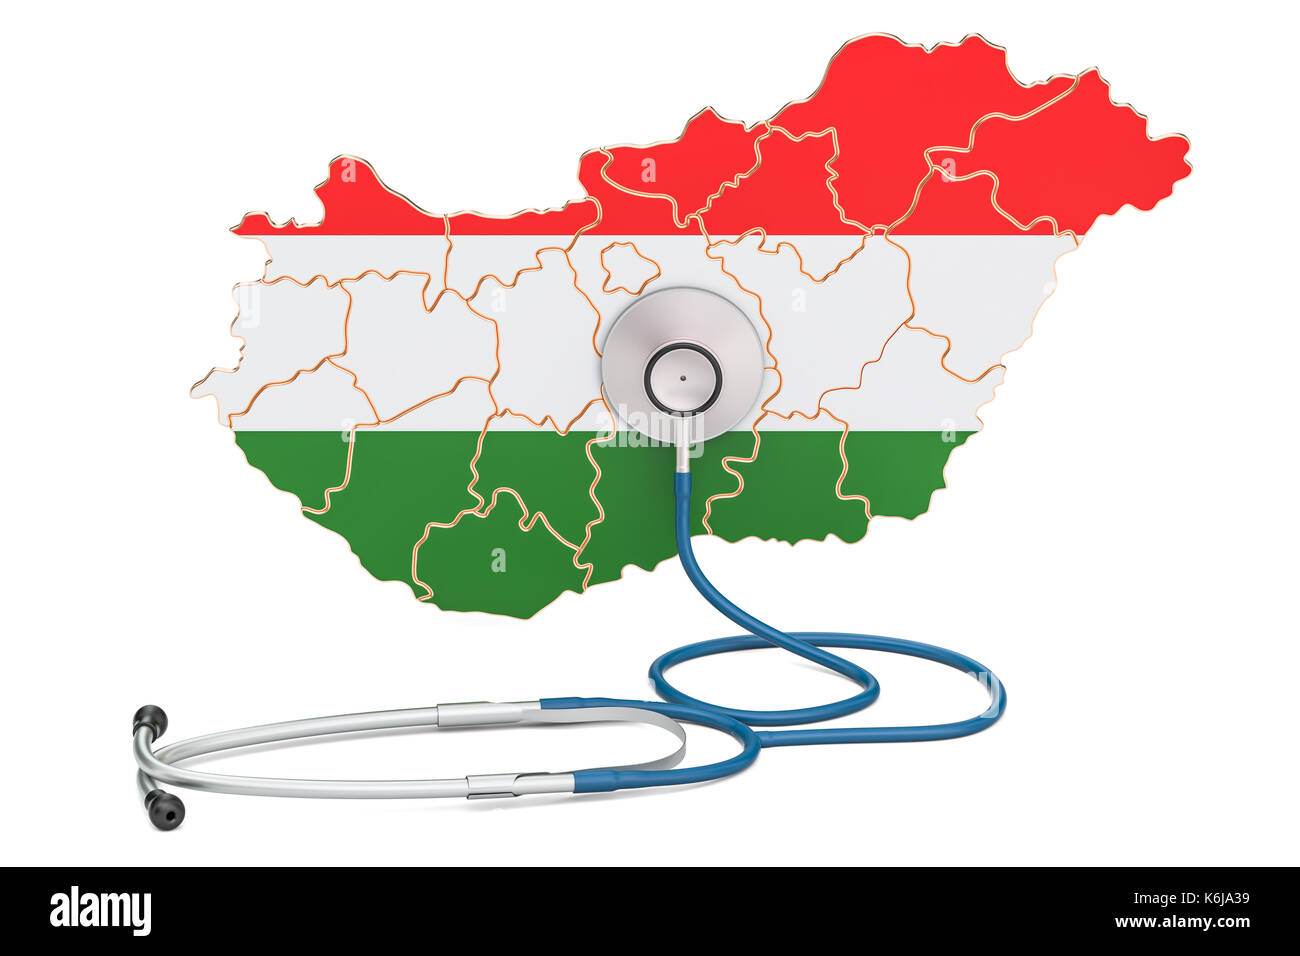 Die ungarische Karte mit Stethoskop, national Health Care Concept, 3D-Rendering Stockfoto